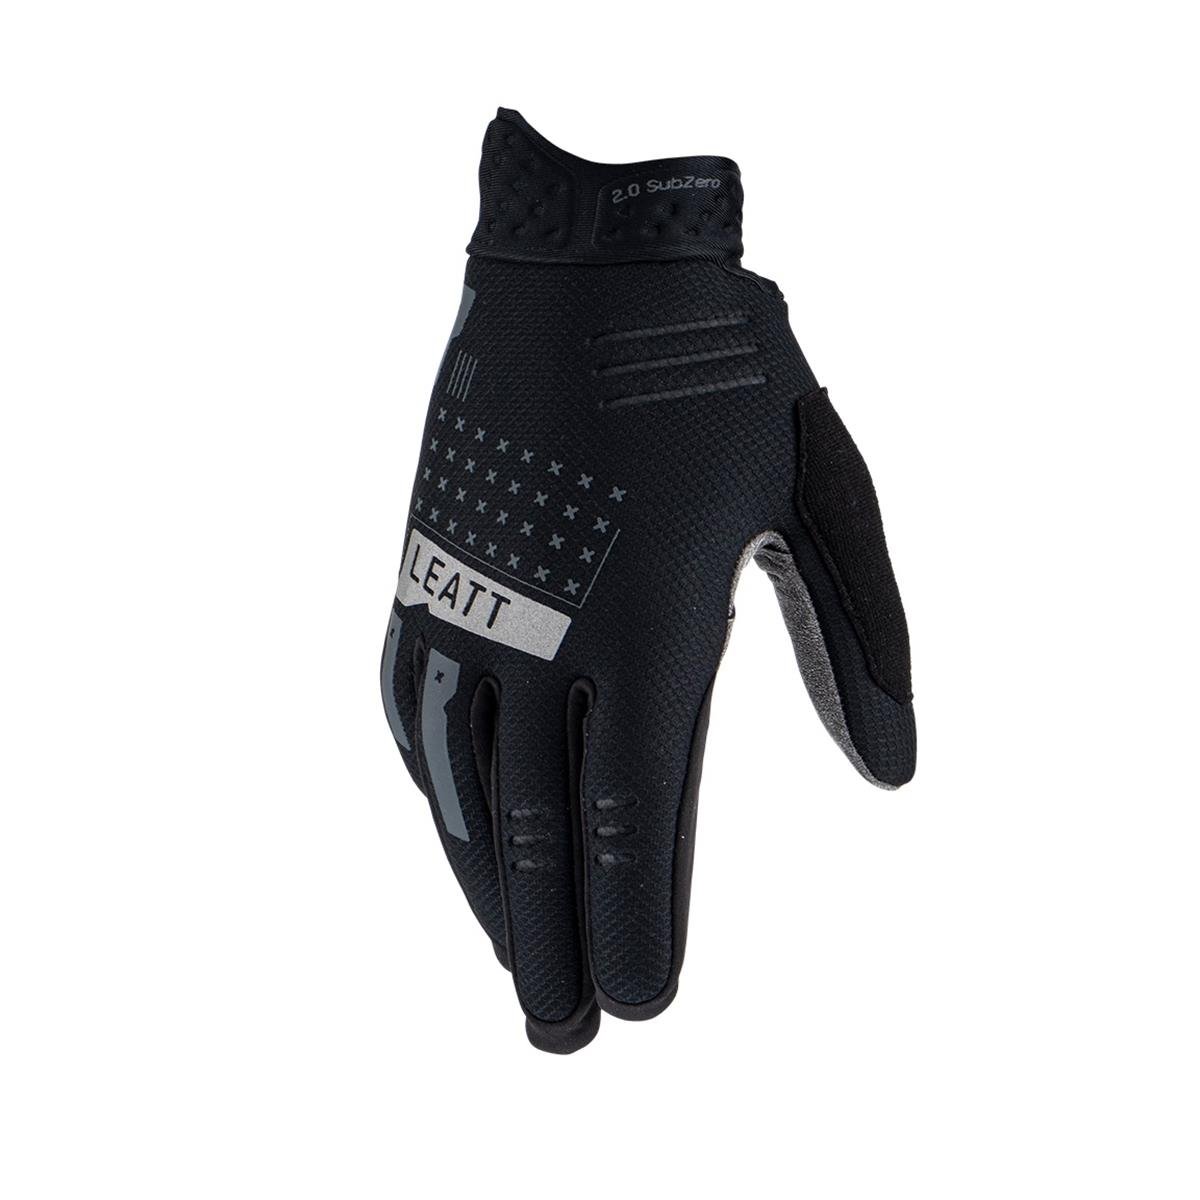 Leatt MTB Gloves 2.0 SubZero Black